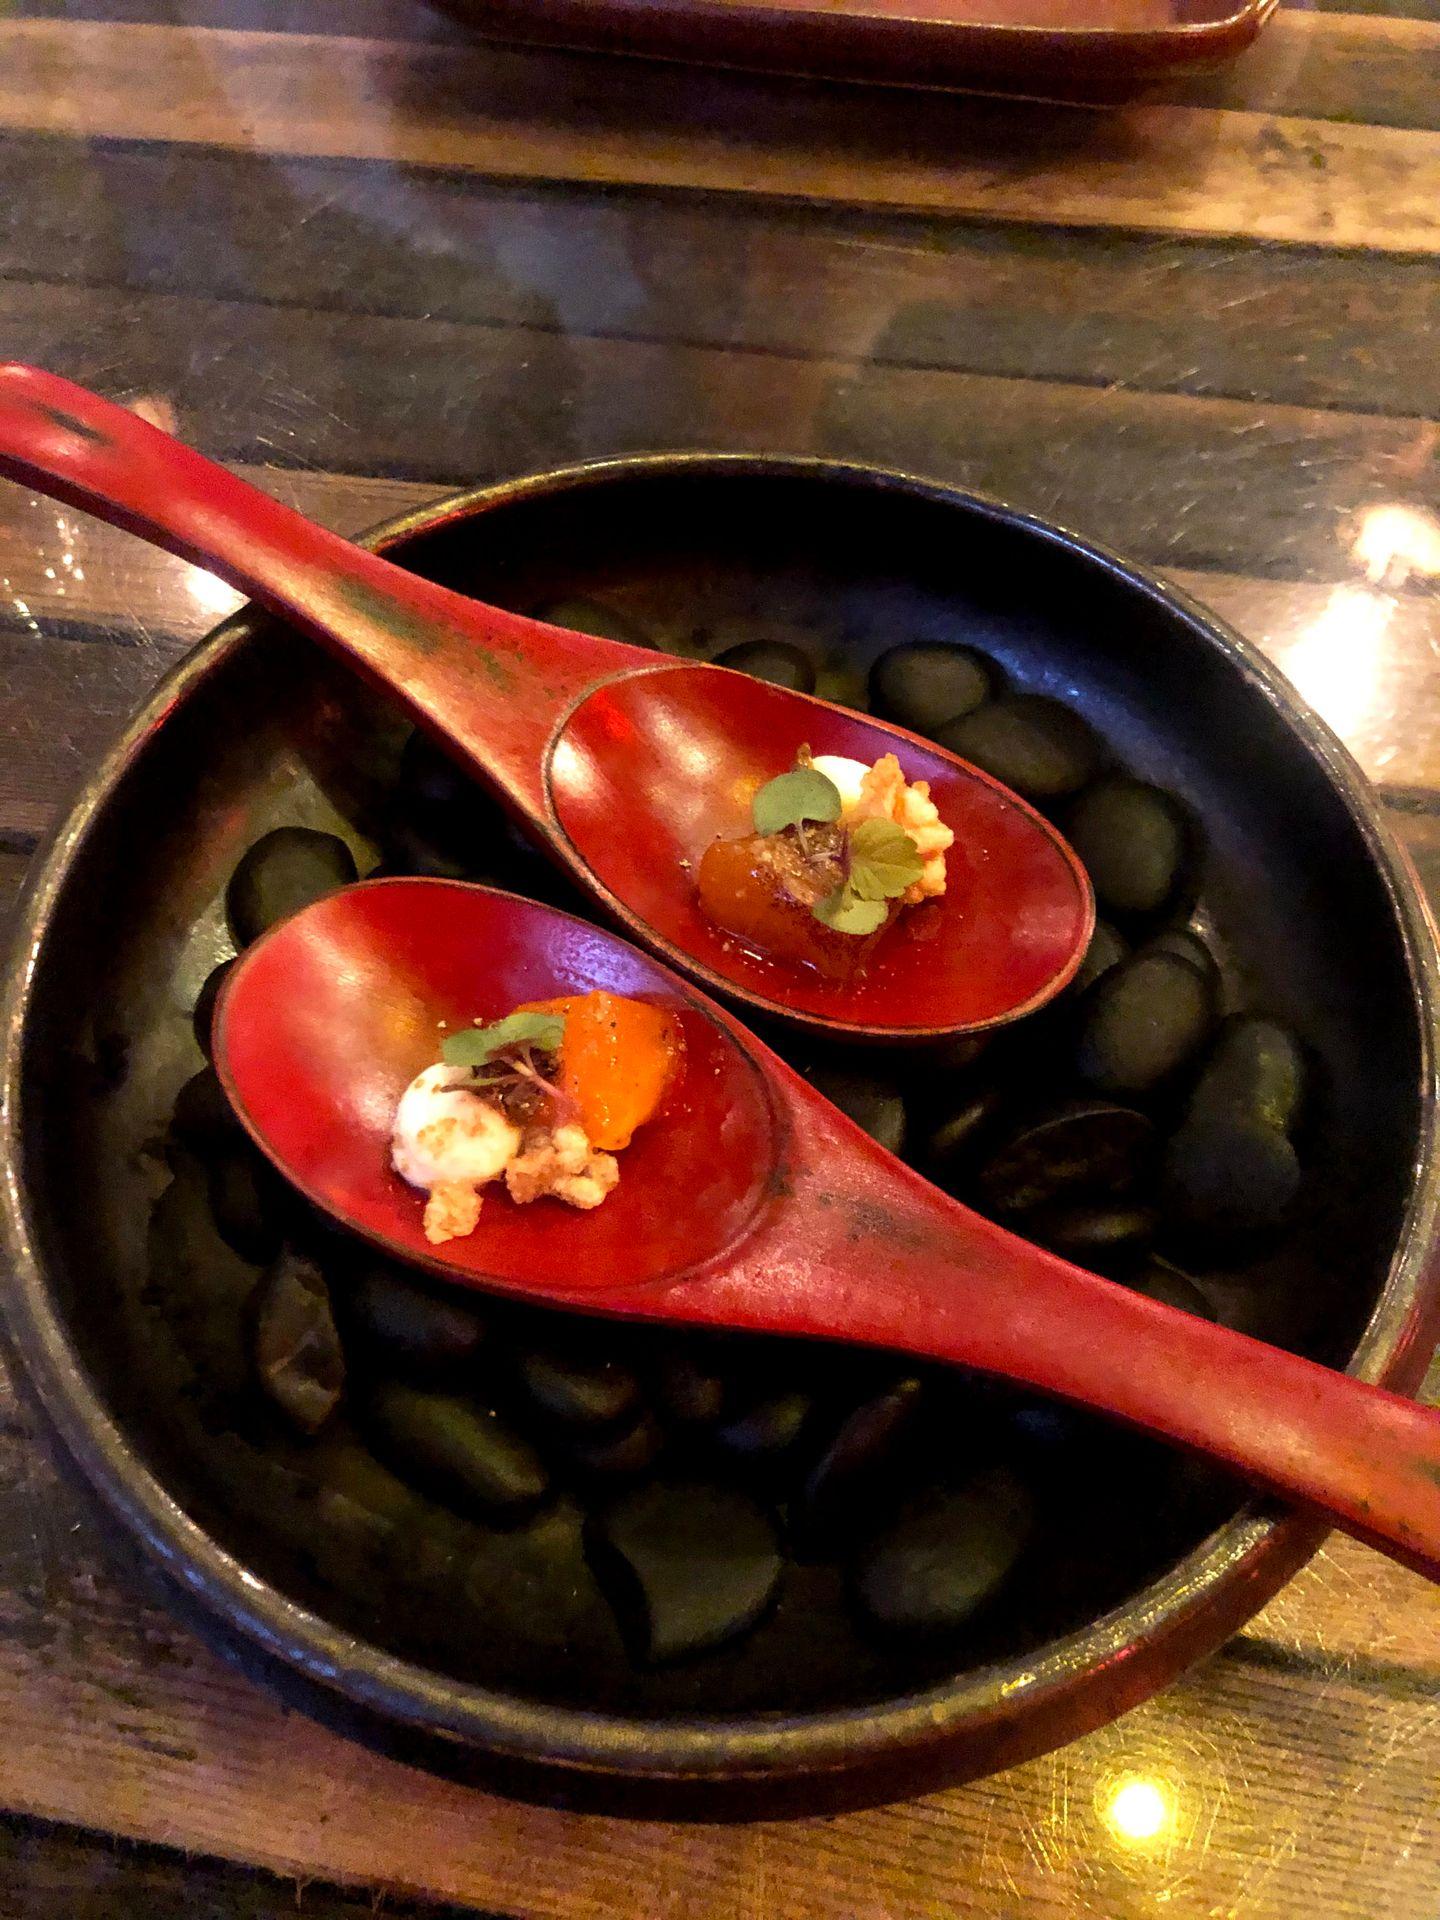 Spoons with small dishes from Kemuri Tatsu-ya